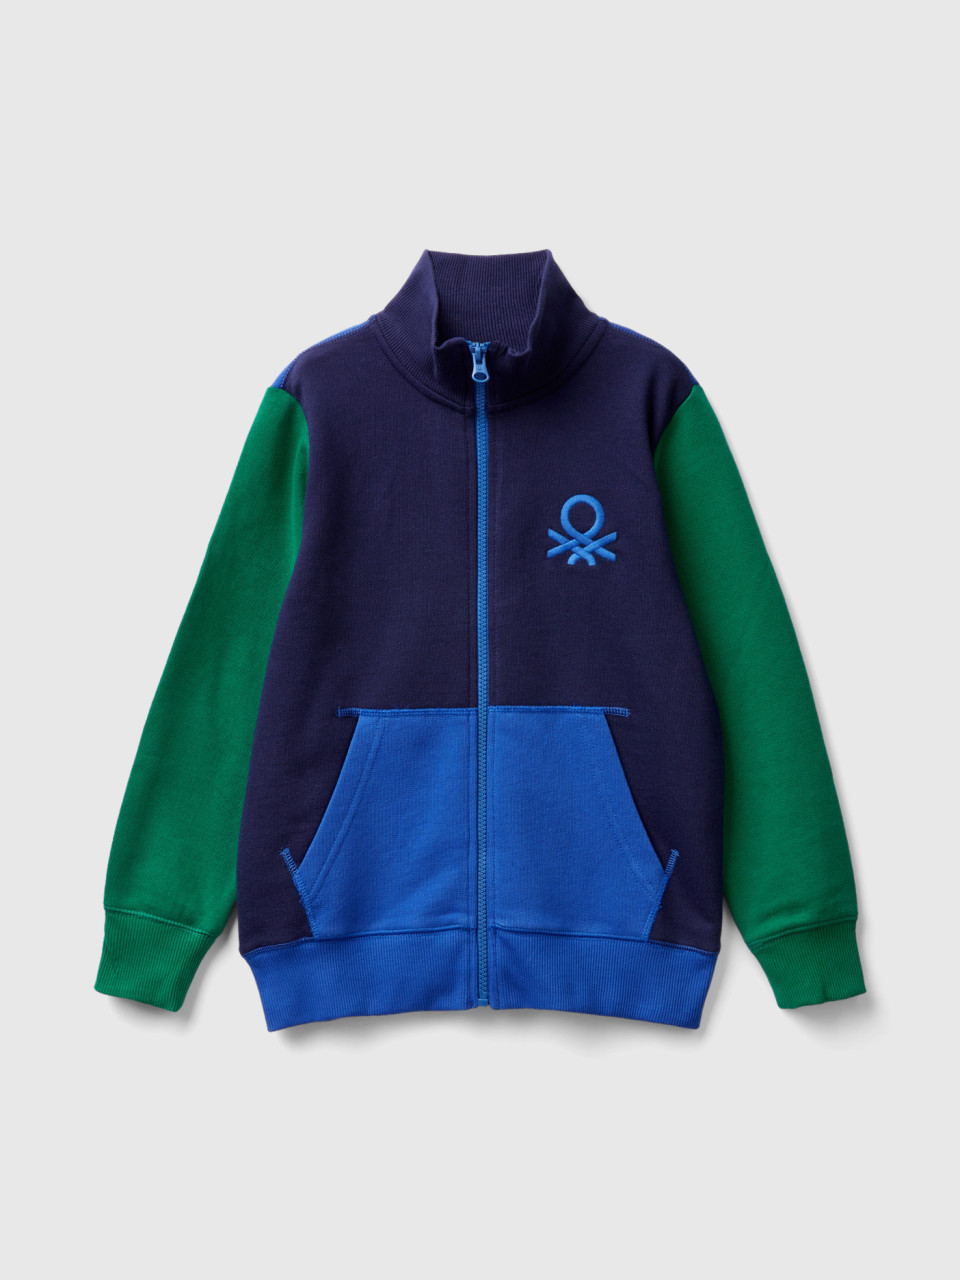 Benetton, Pure Cotton Sweatshirt With Zipper, Multi-color, Kids